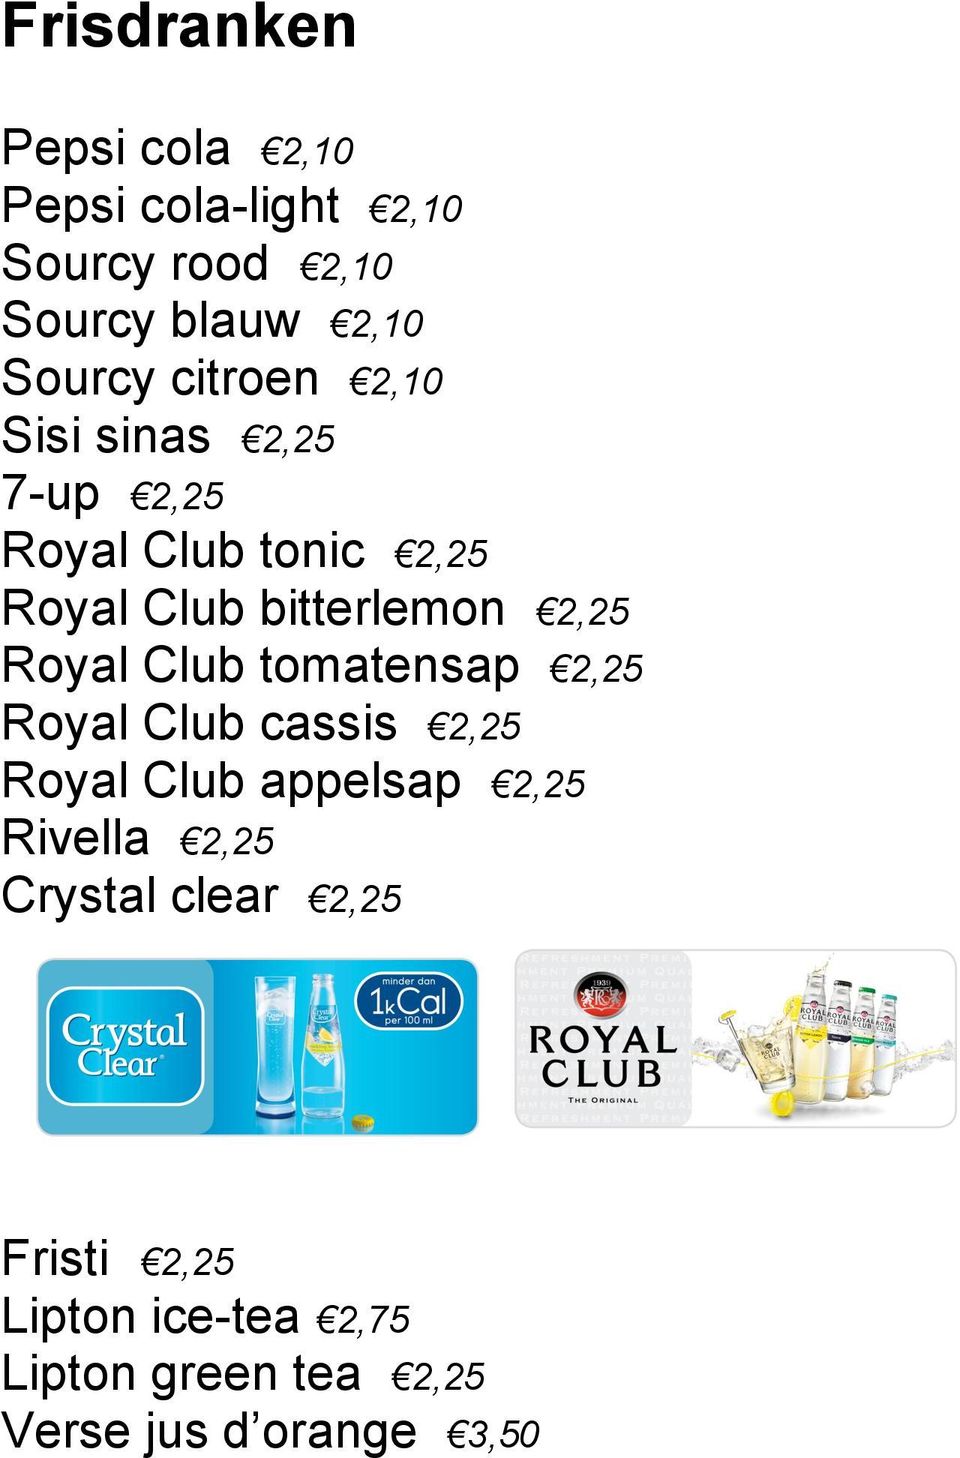 Royal Club tomatensap 2,25 Royal Club cassis 2,25 Royal Club appelsap 2,25 Rivella 2,25